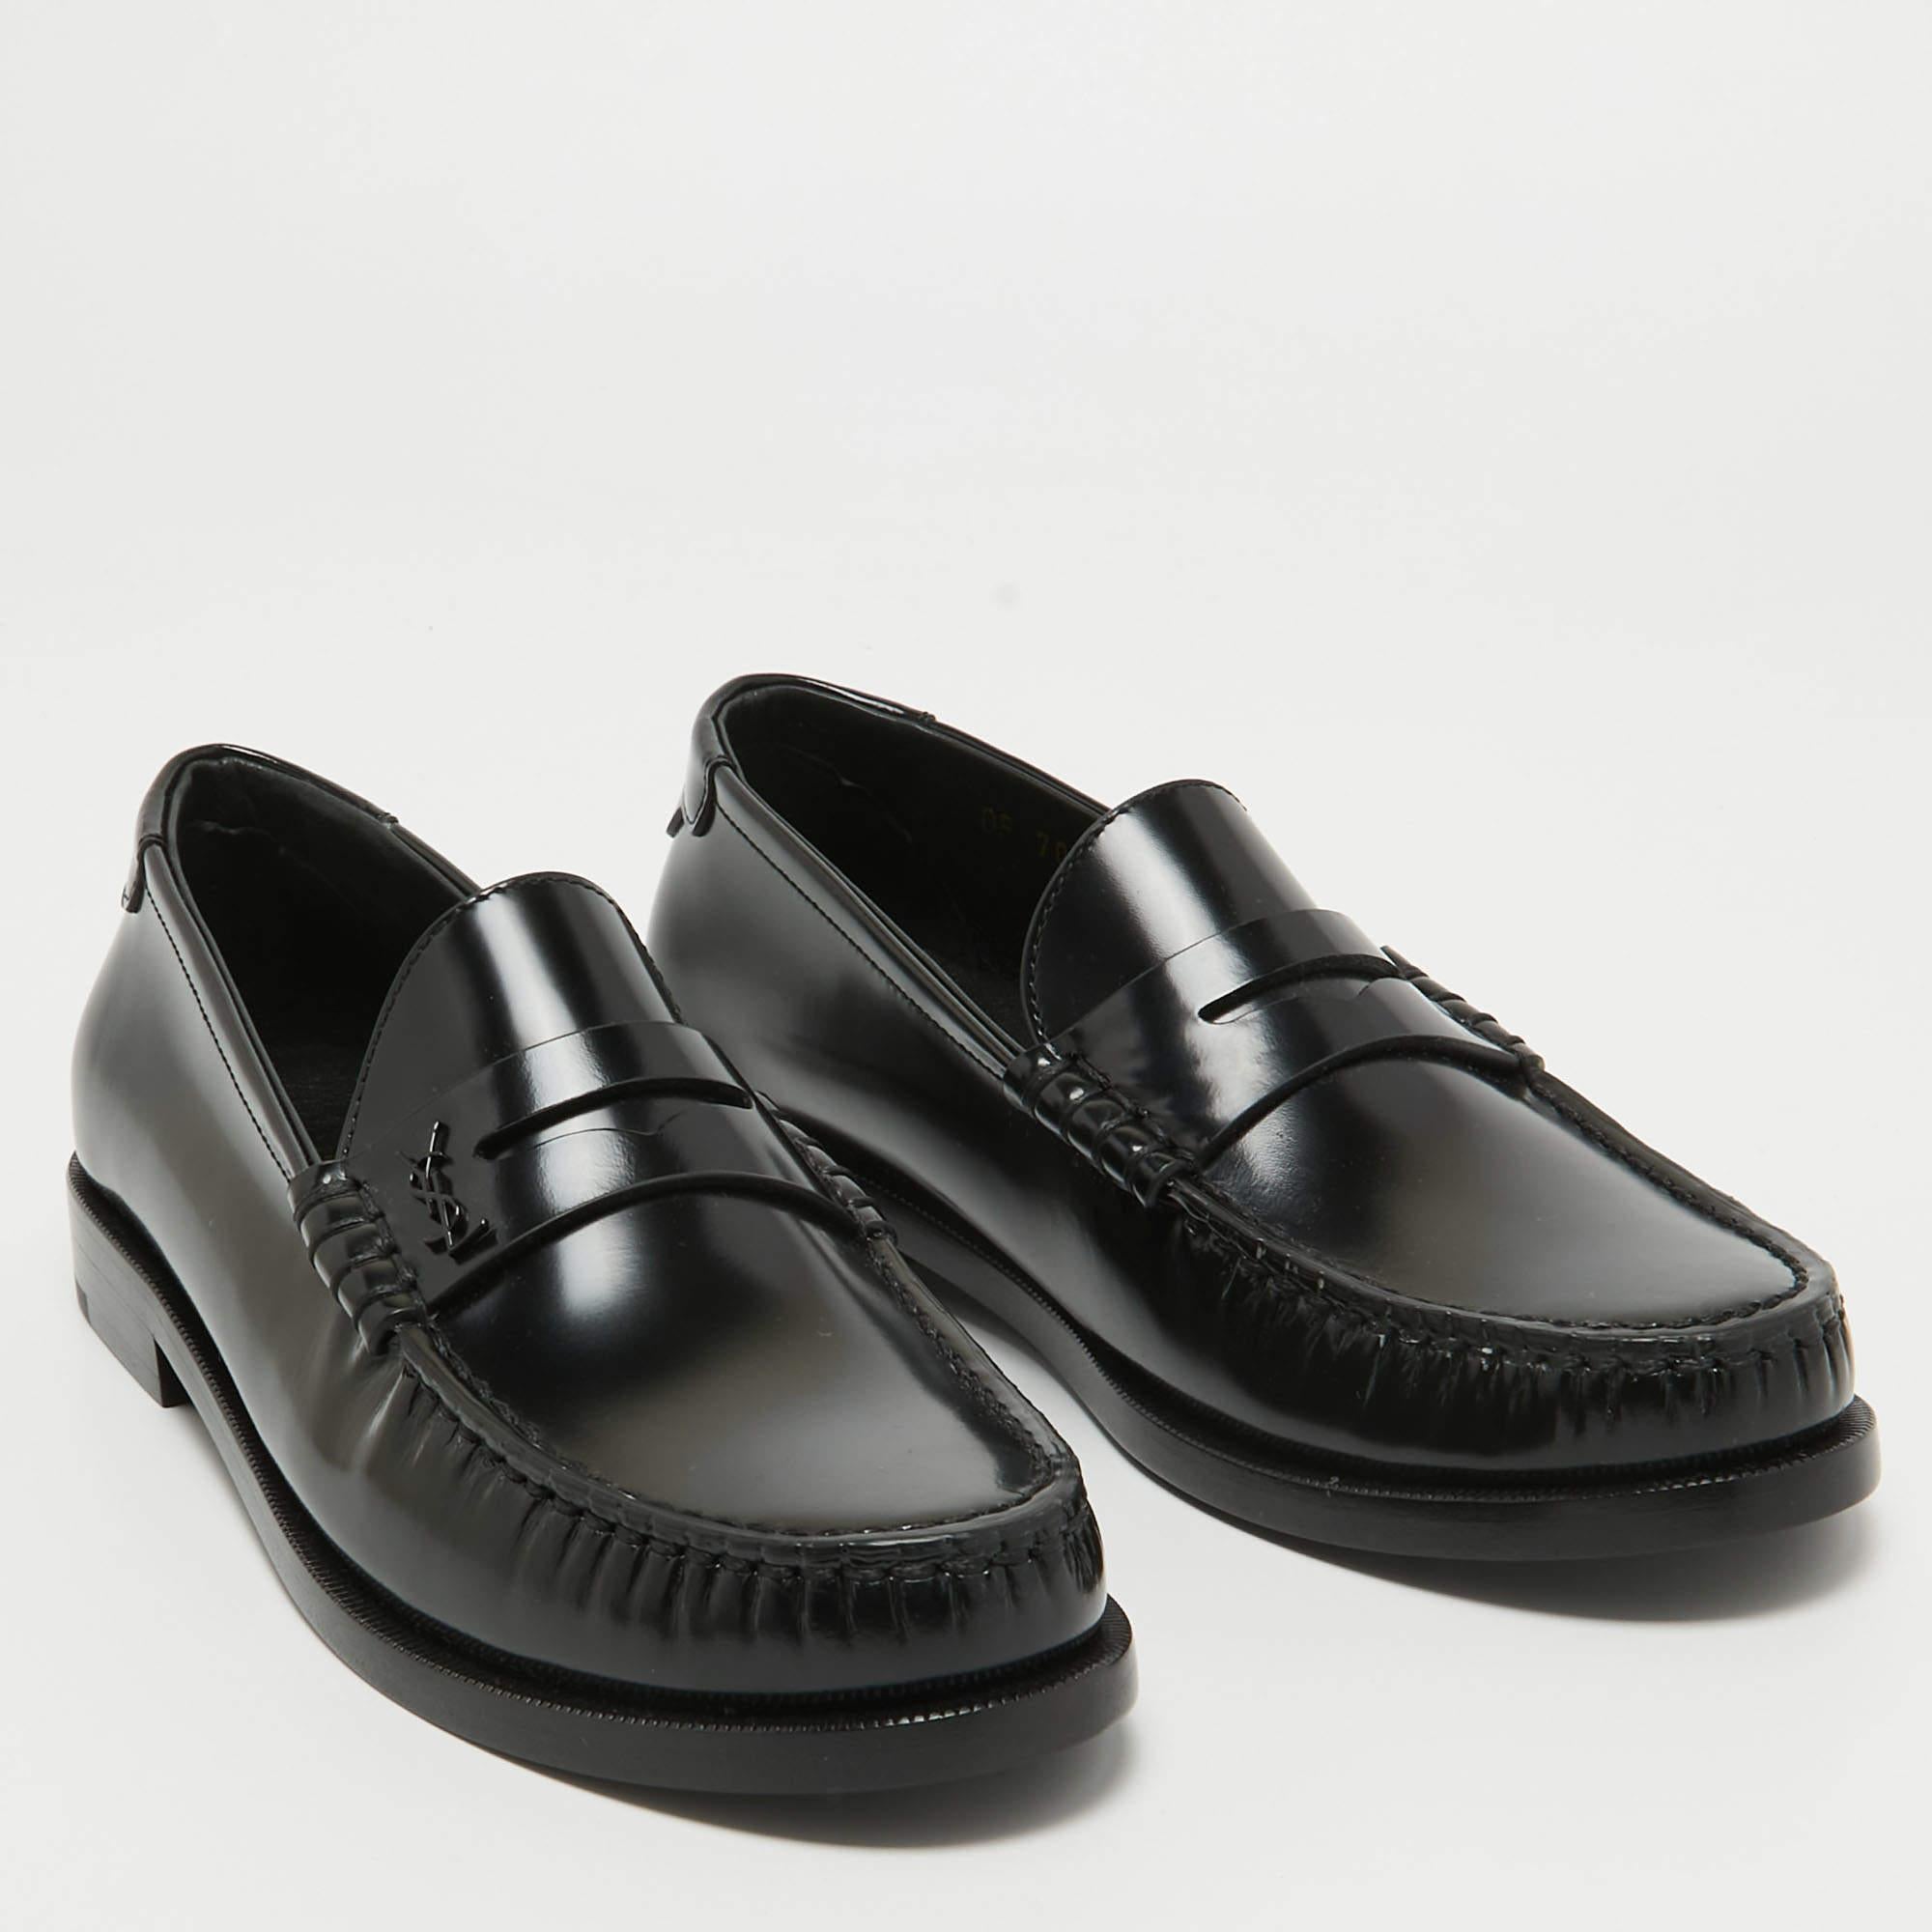 Women's Saint Laurent Black Leather Penny Loafers Size 37